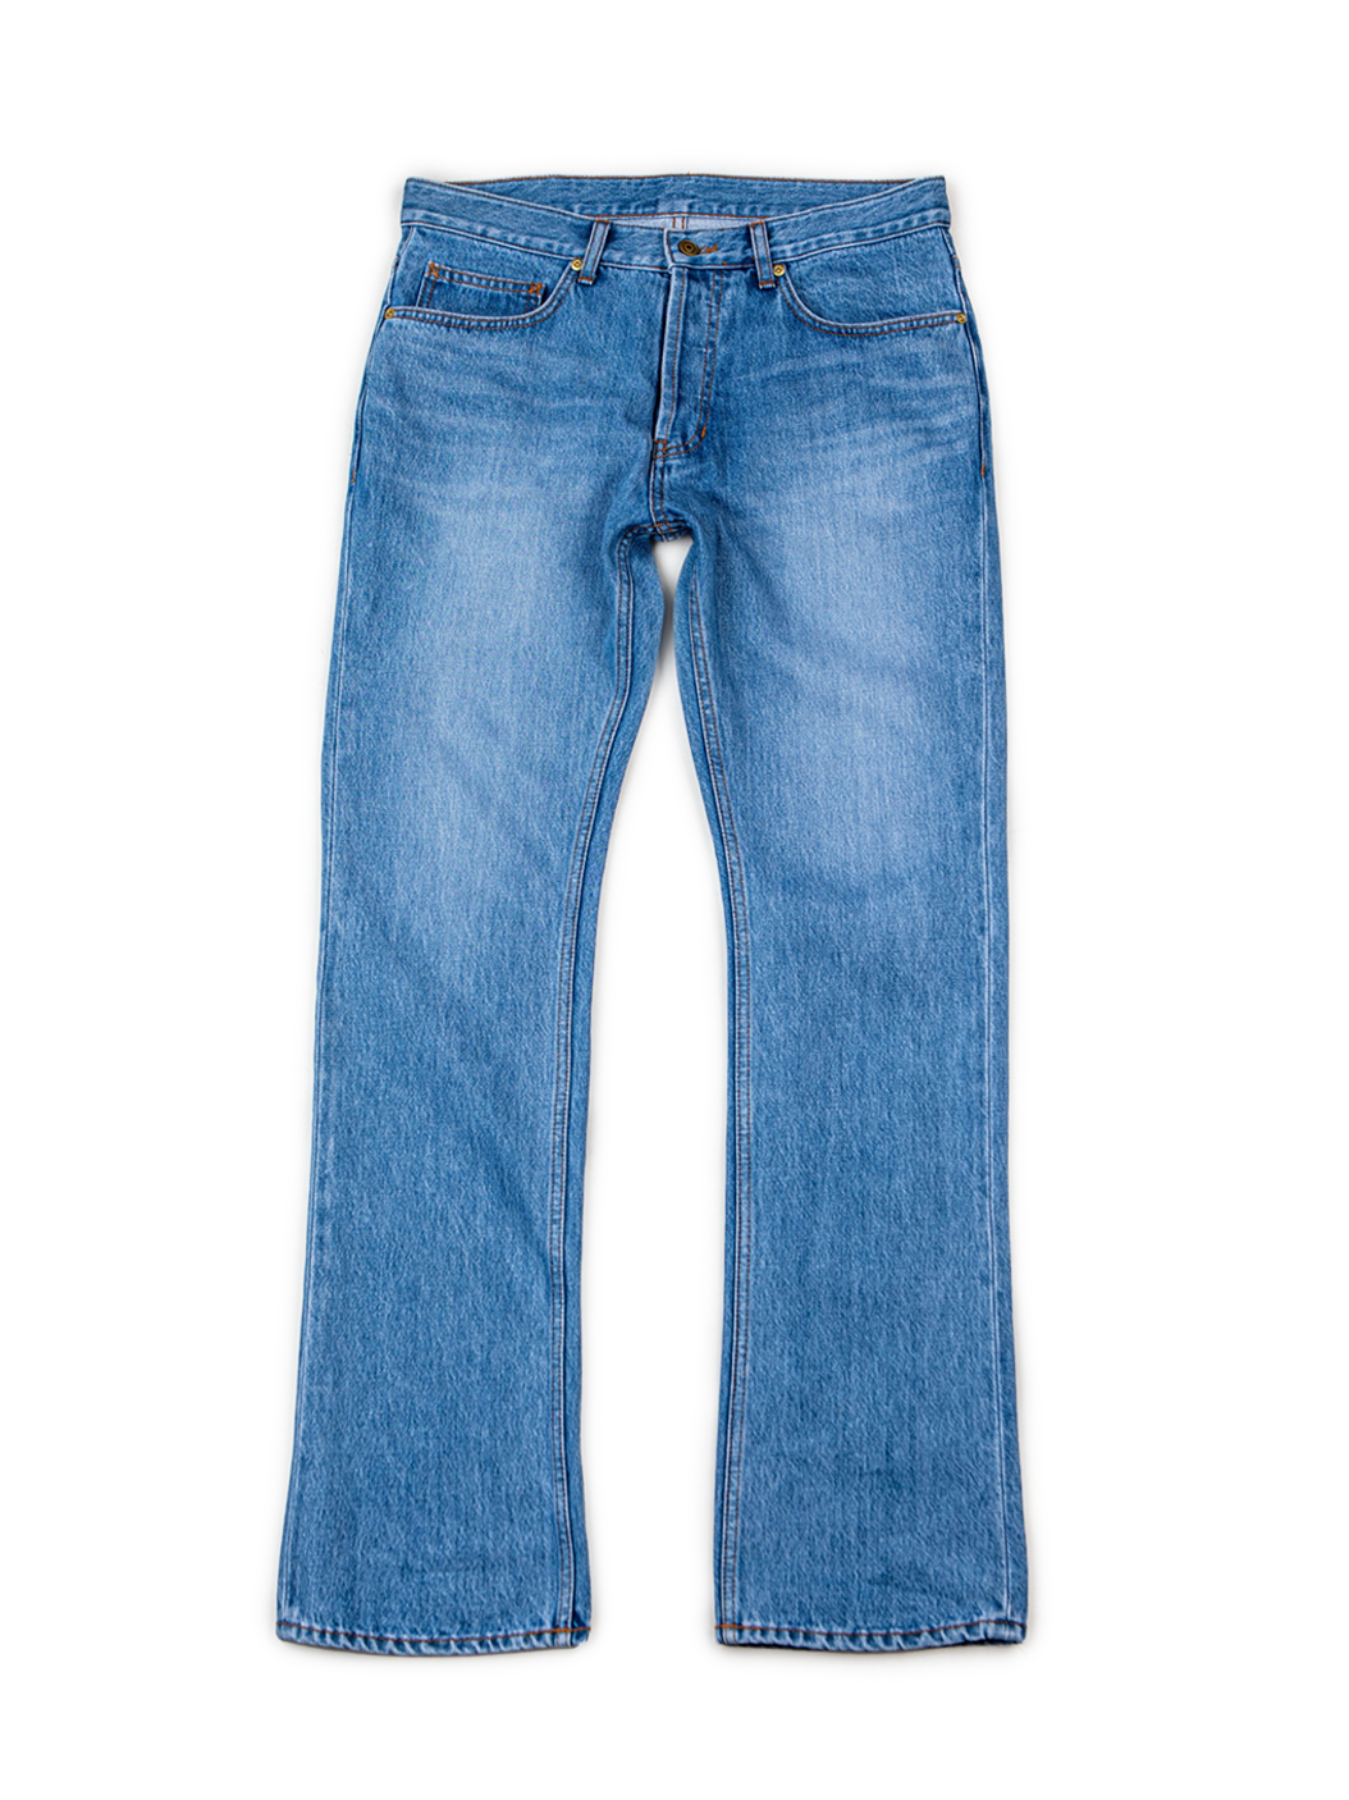 Symmetric flare jeans #10 [mid blue]